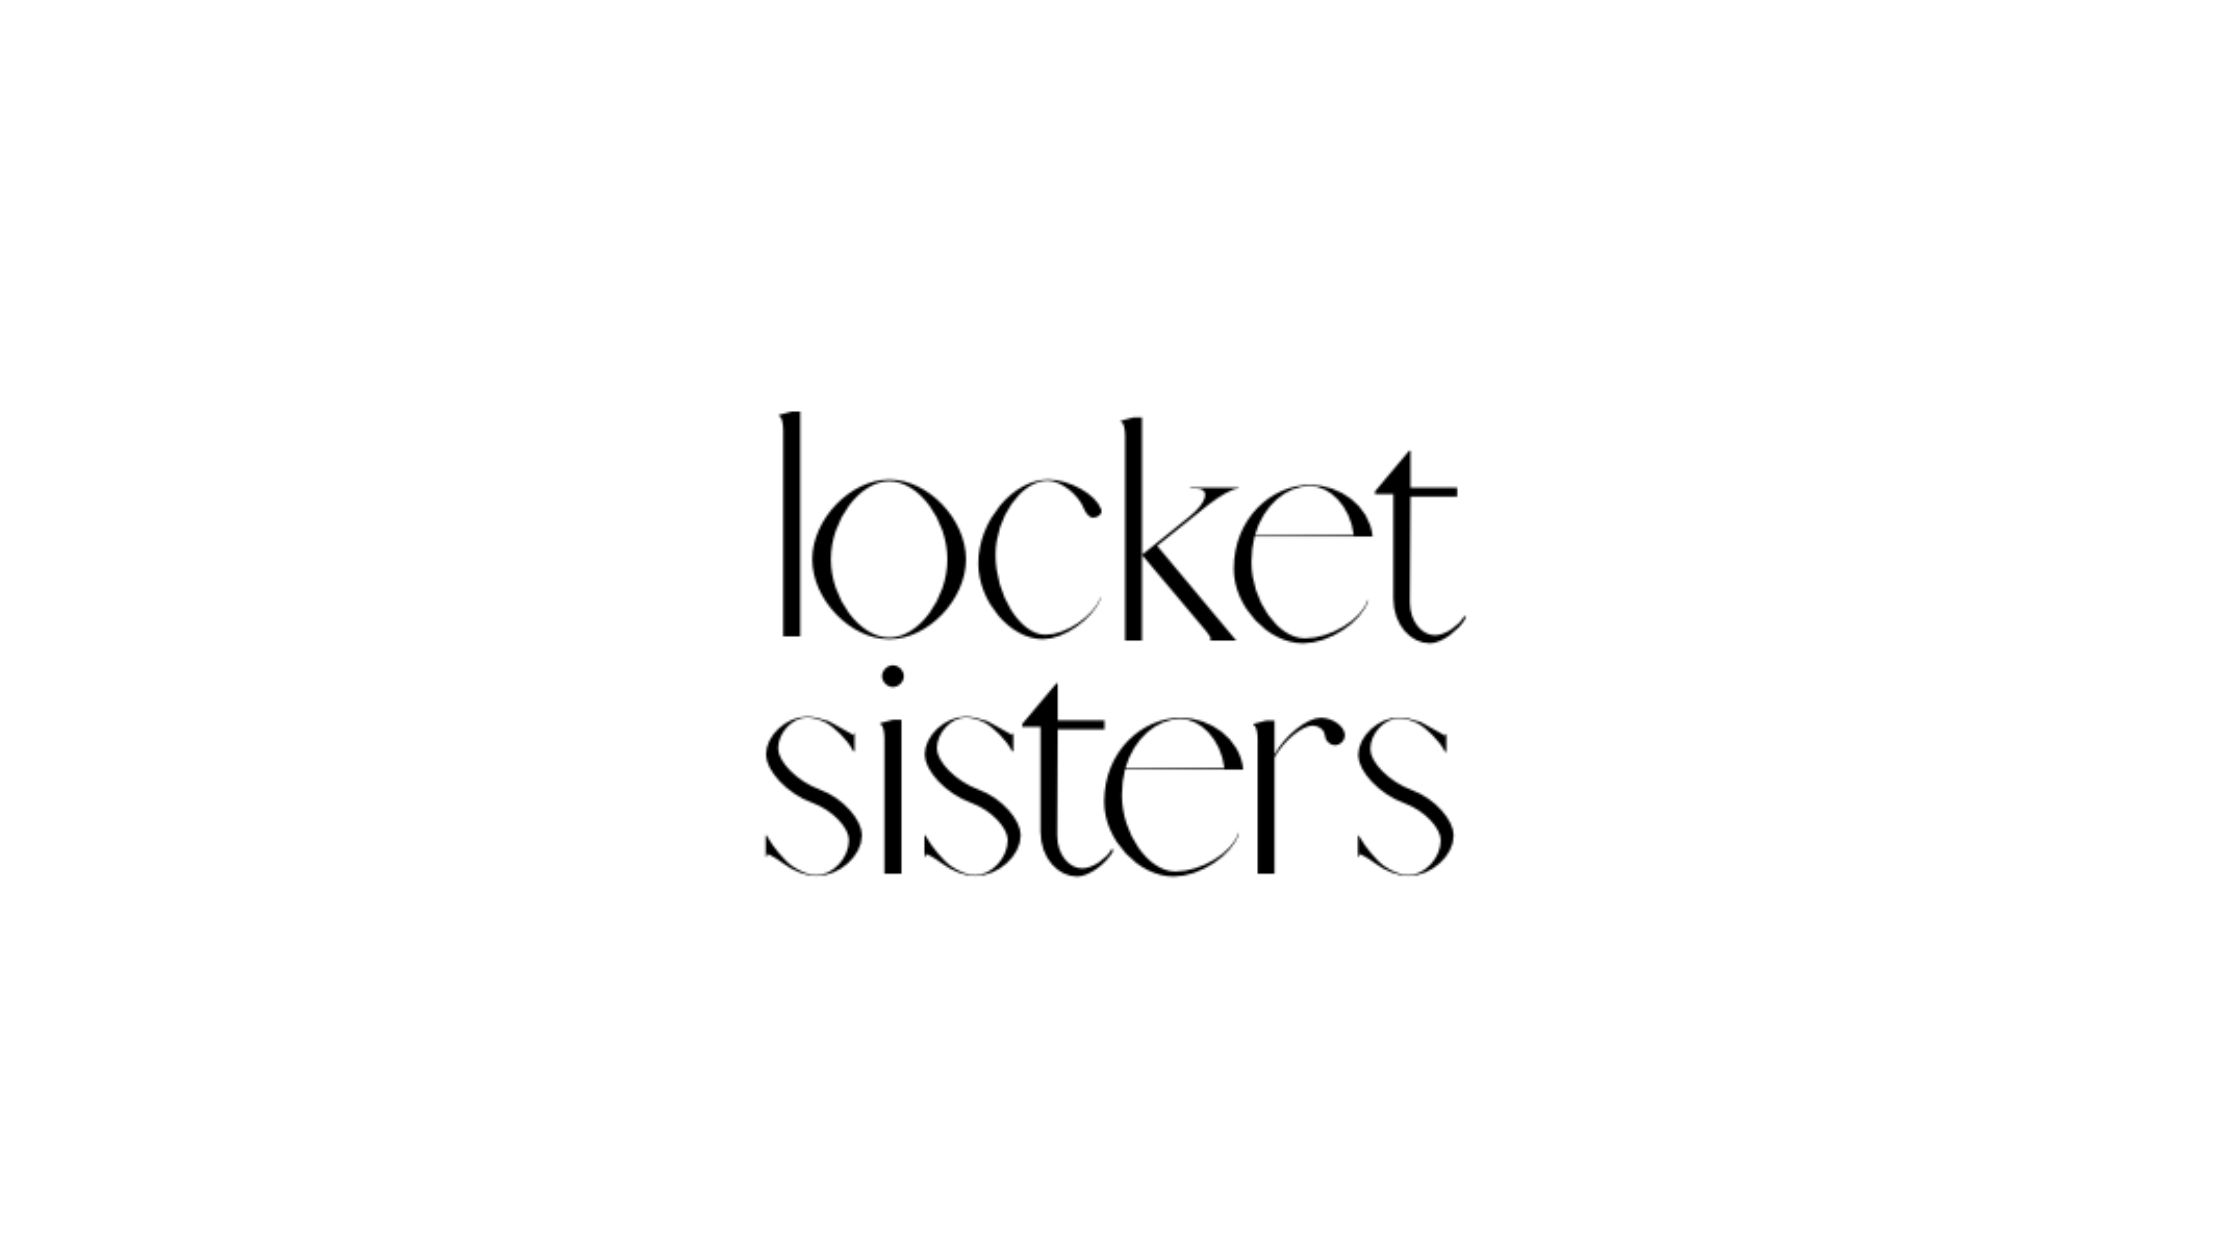 The Locket Sisters